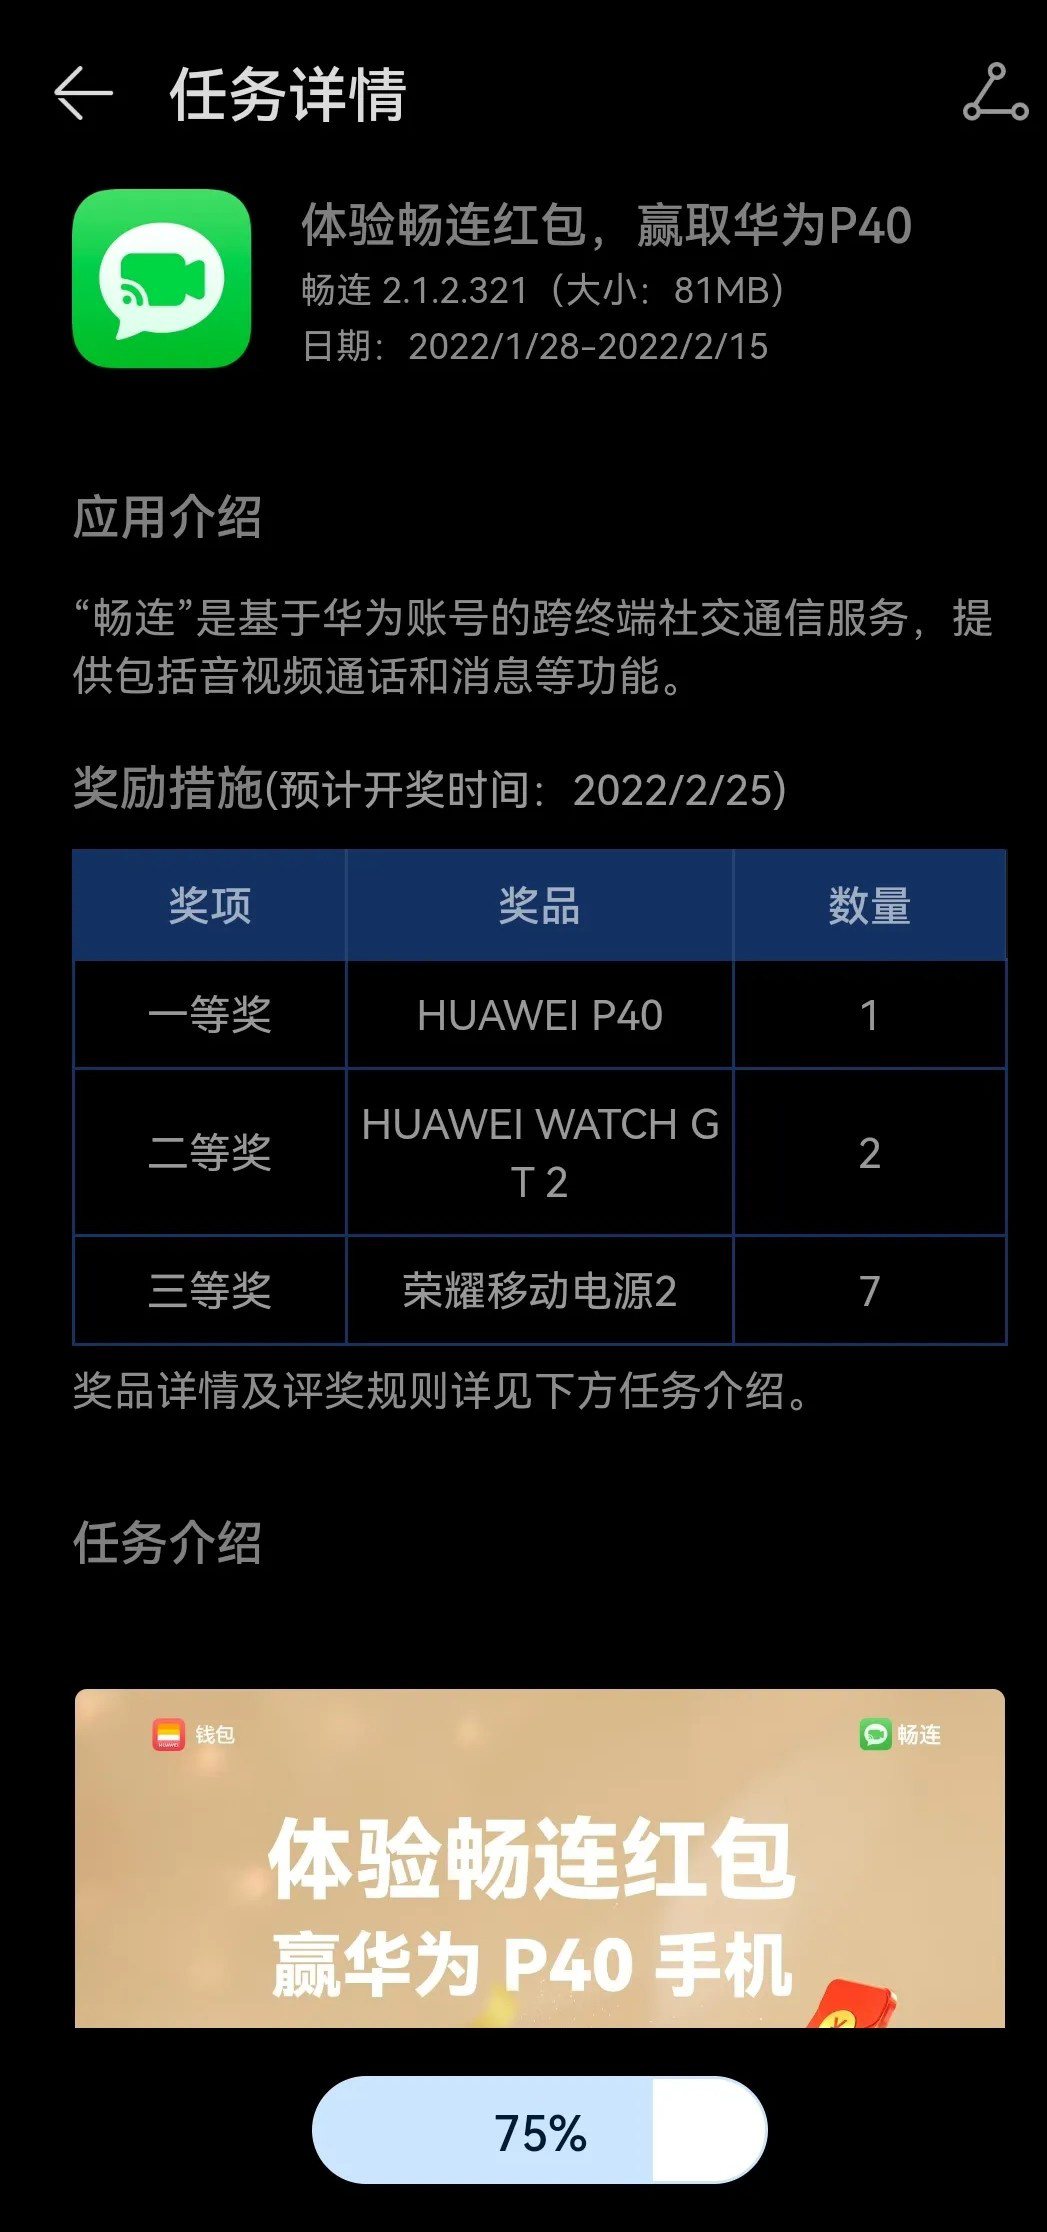 Huawei MeeTime App 2.1.2.321 test version to run red envelope function